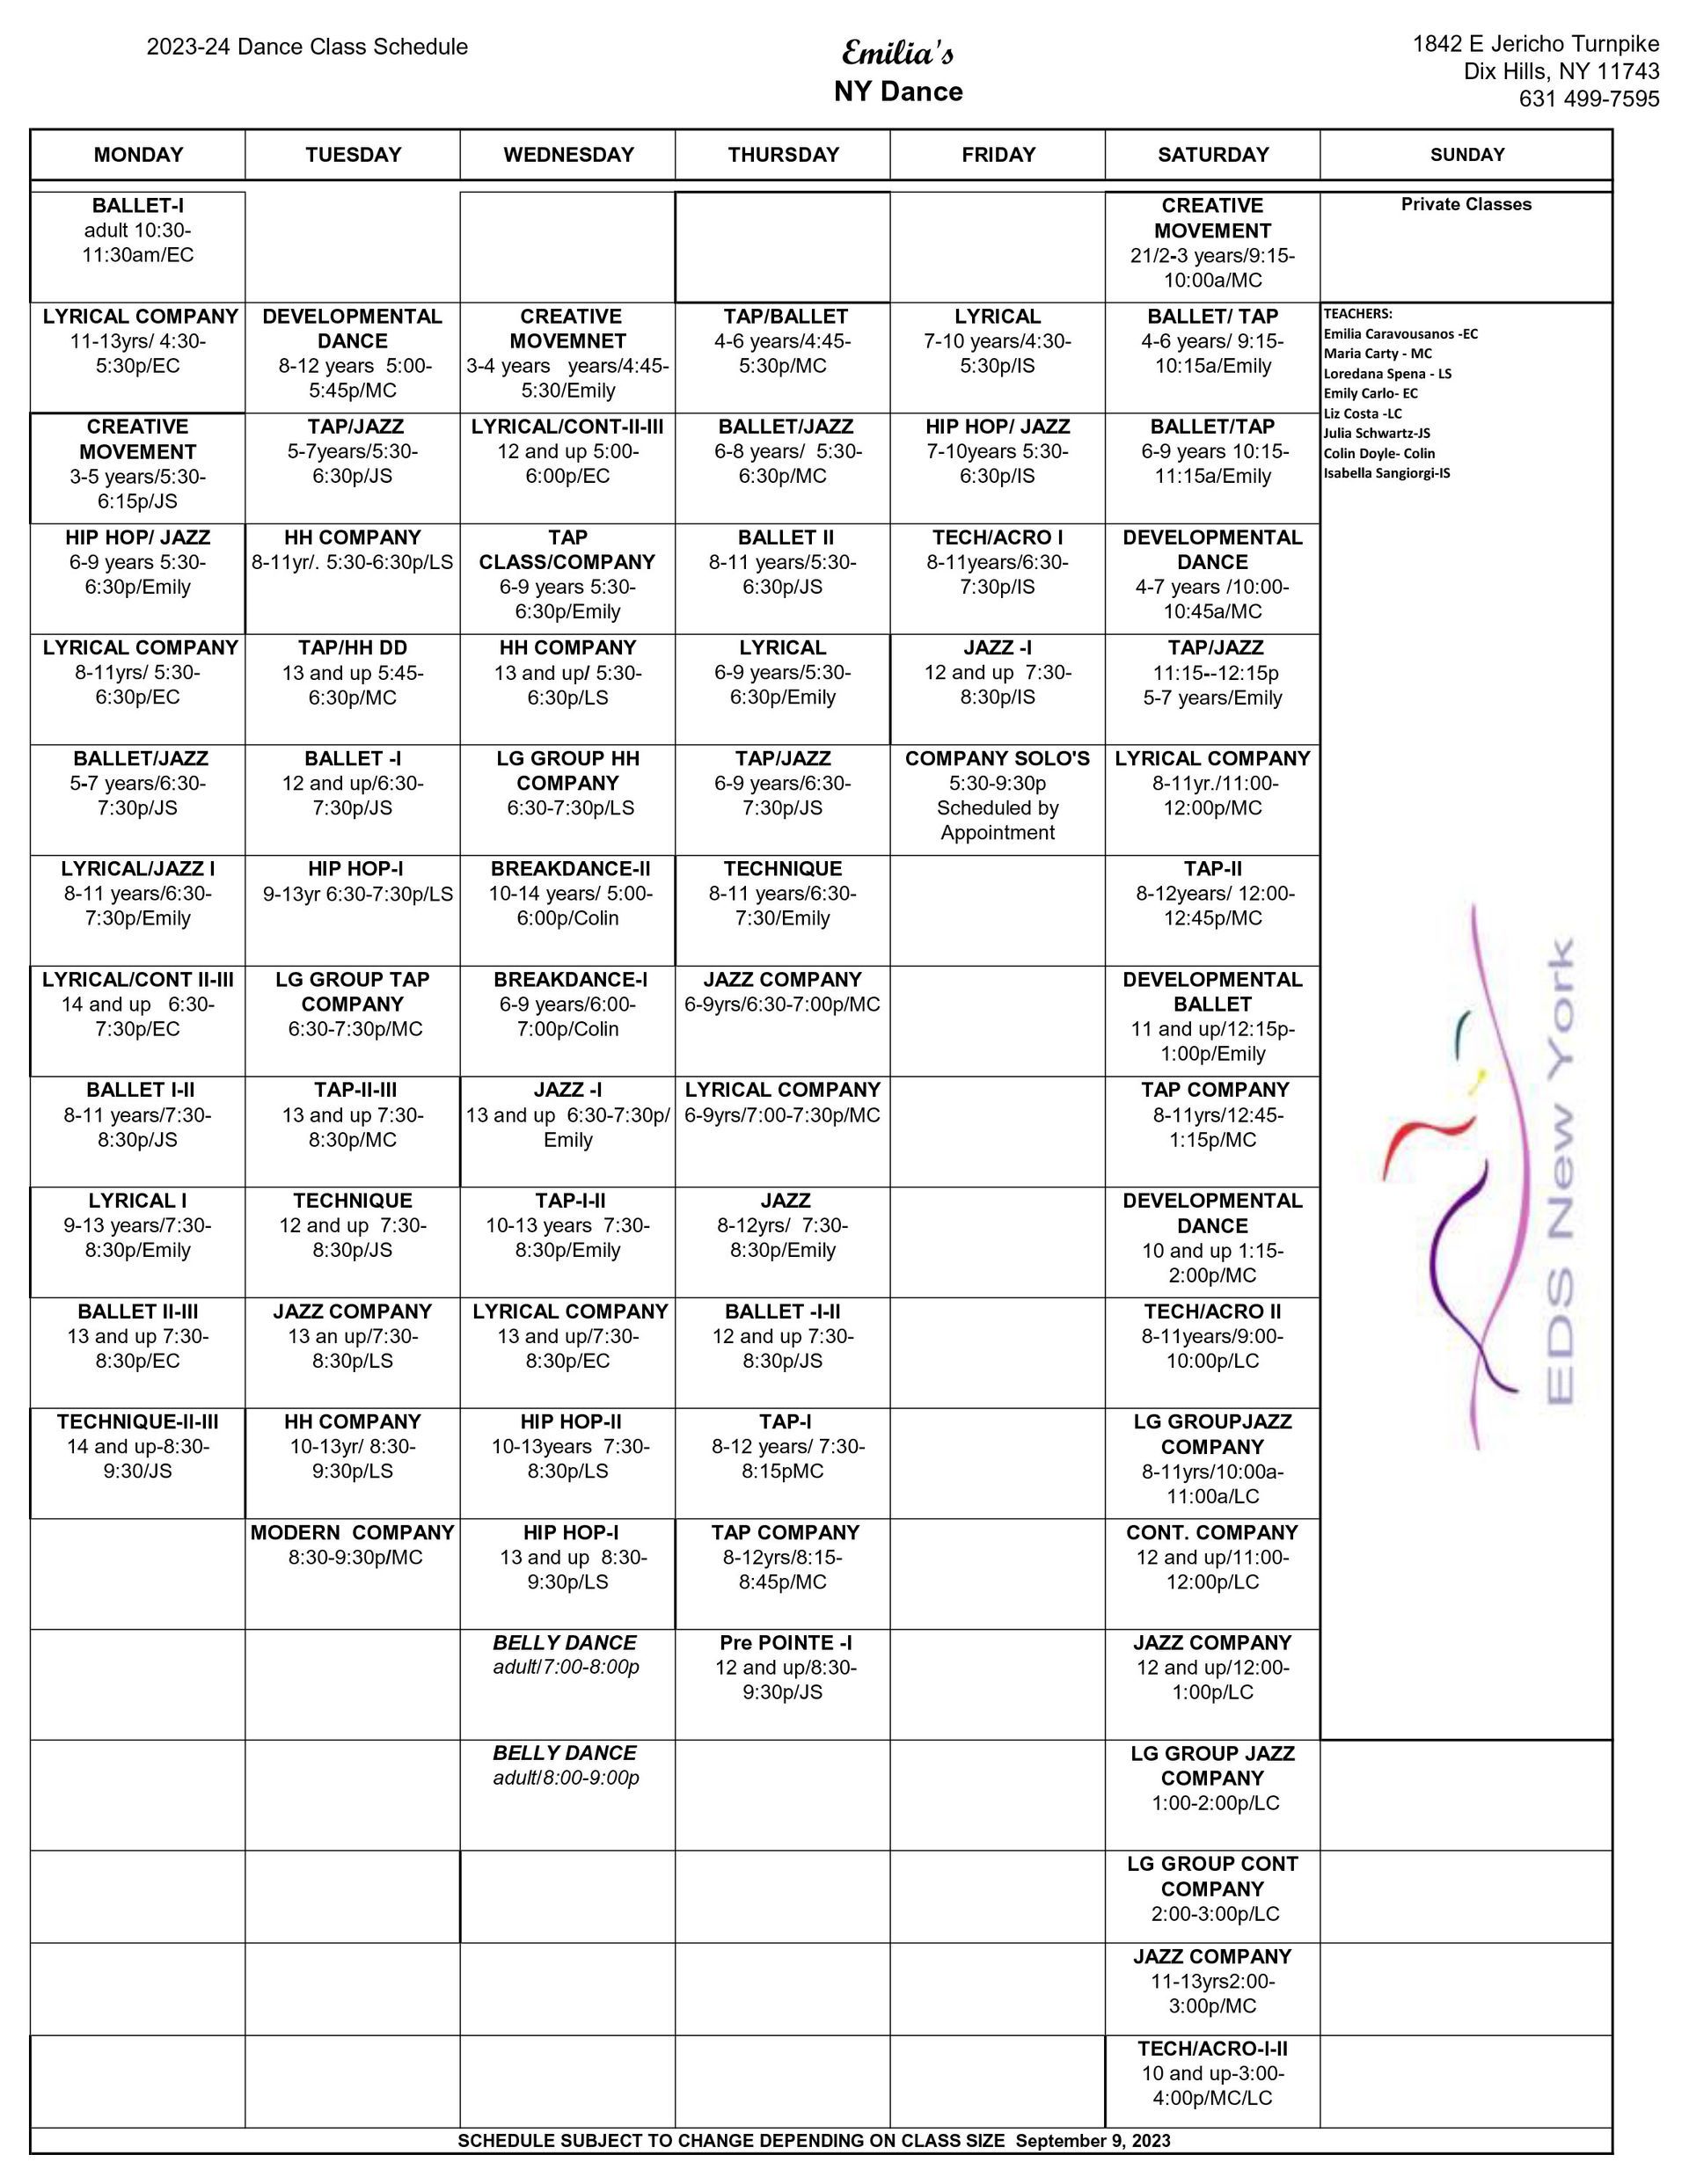 2023-24 Fall Dance Class Schedule